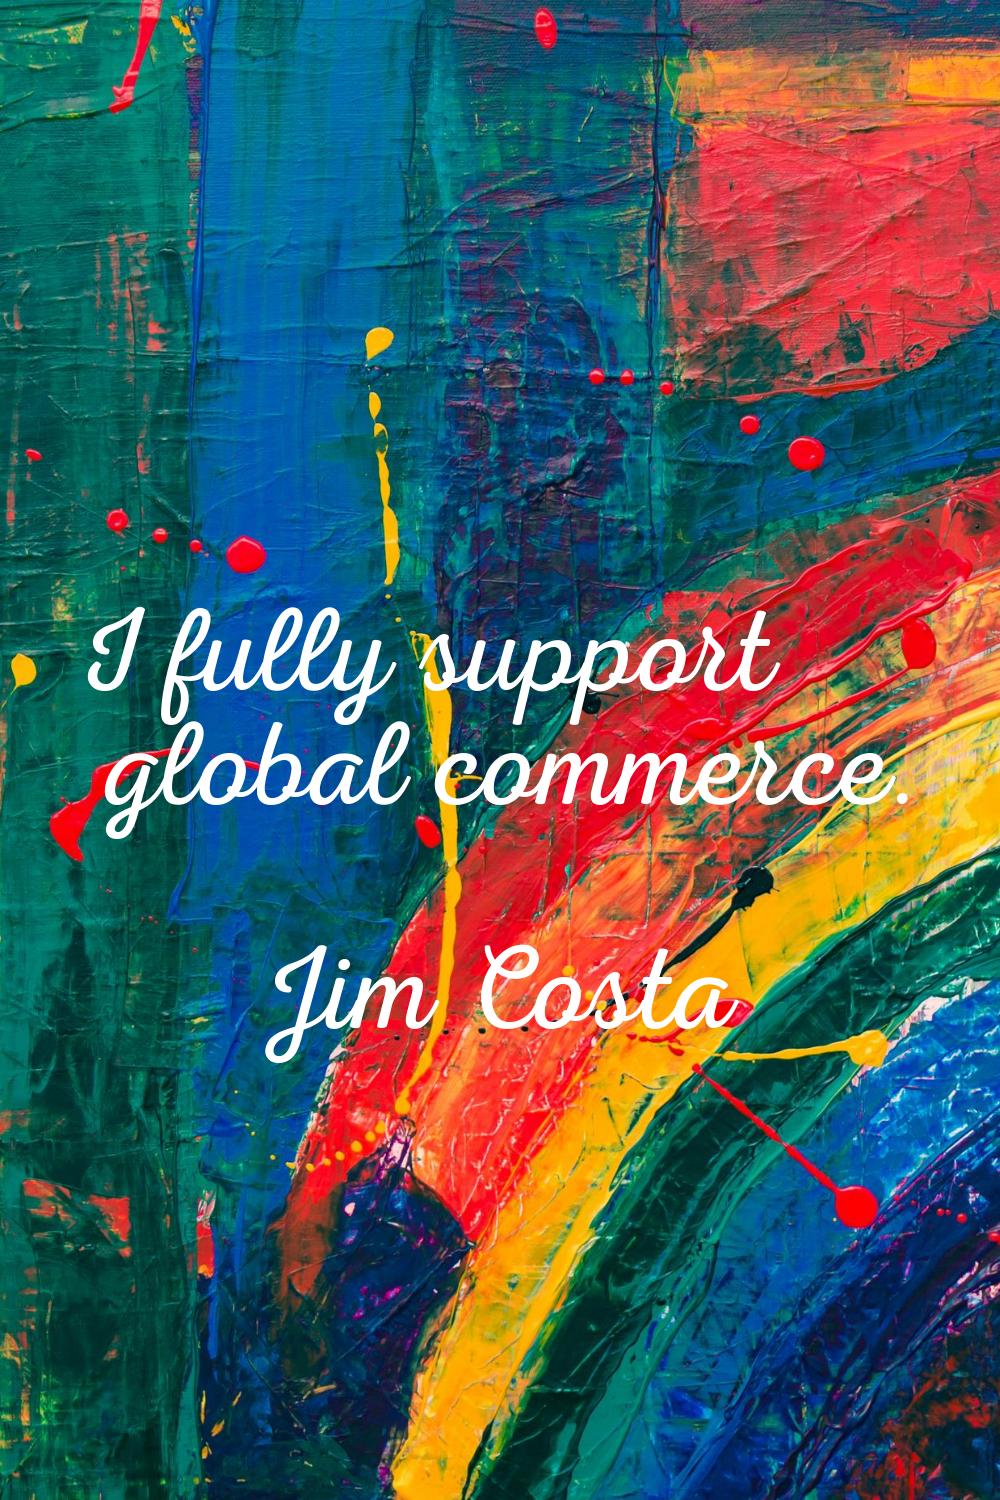 I fully support global commerce.